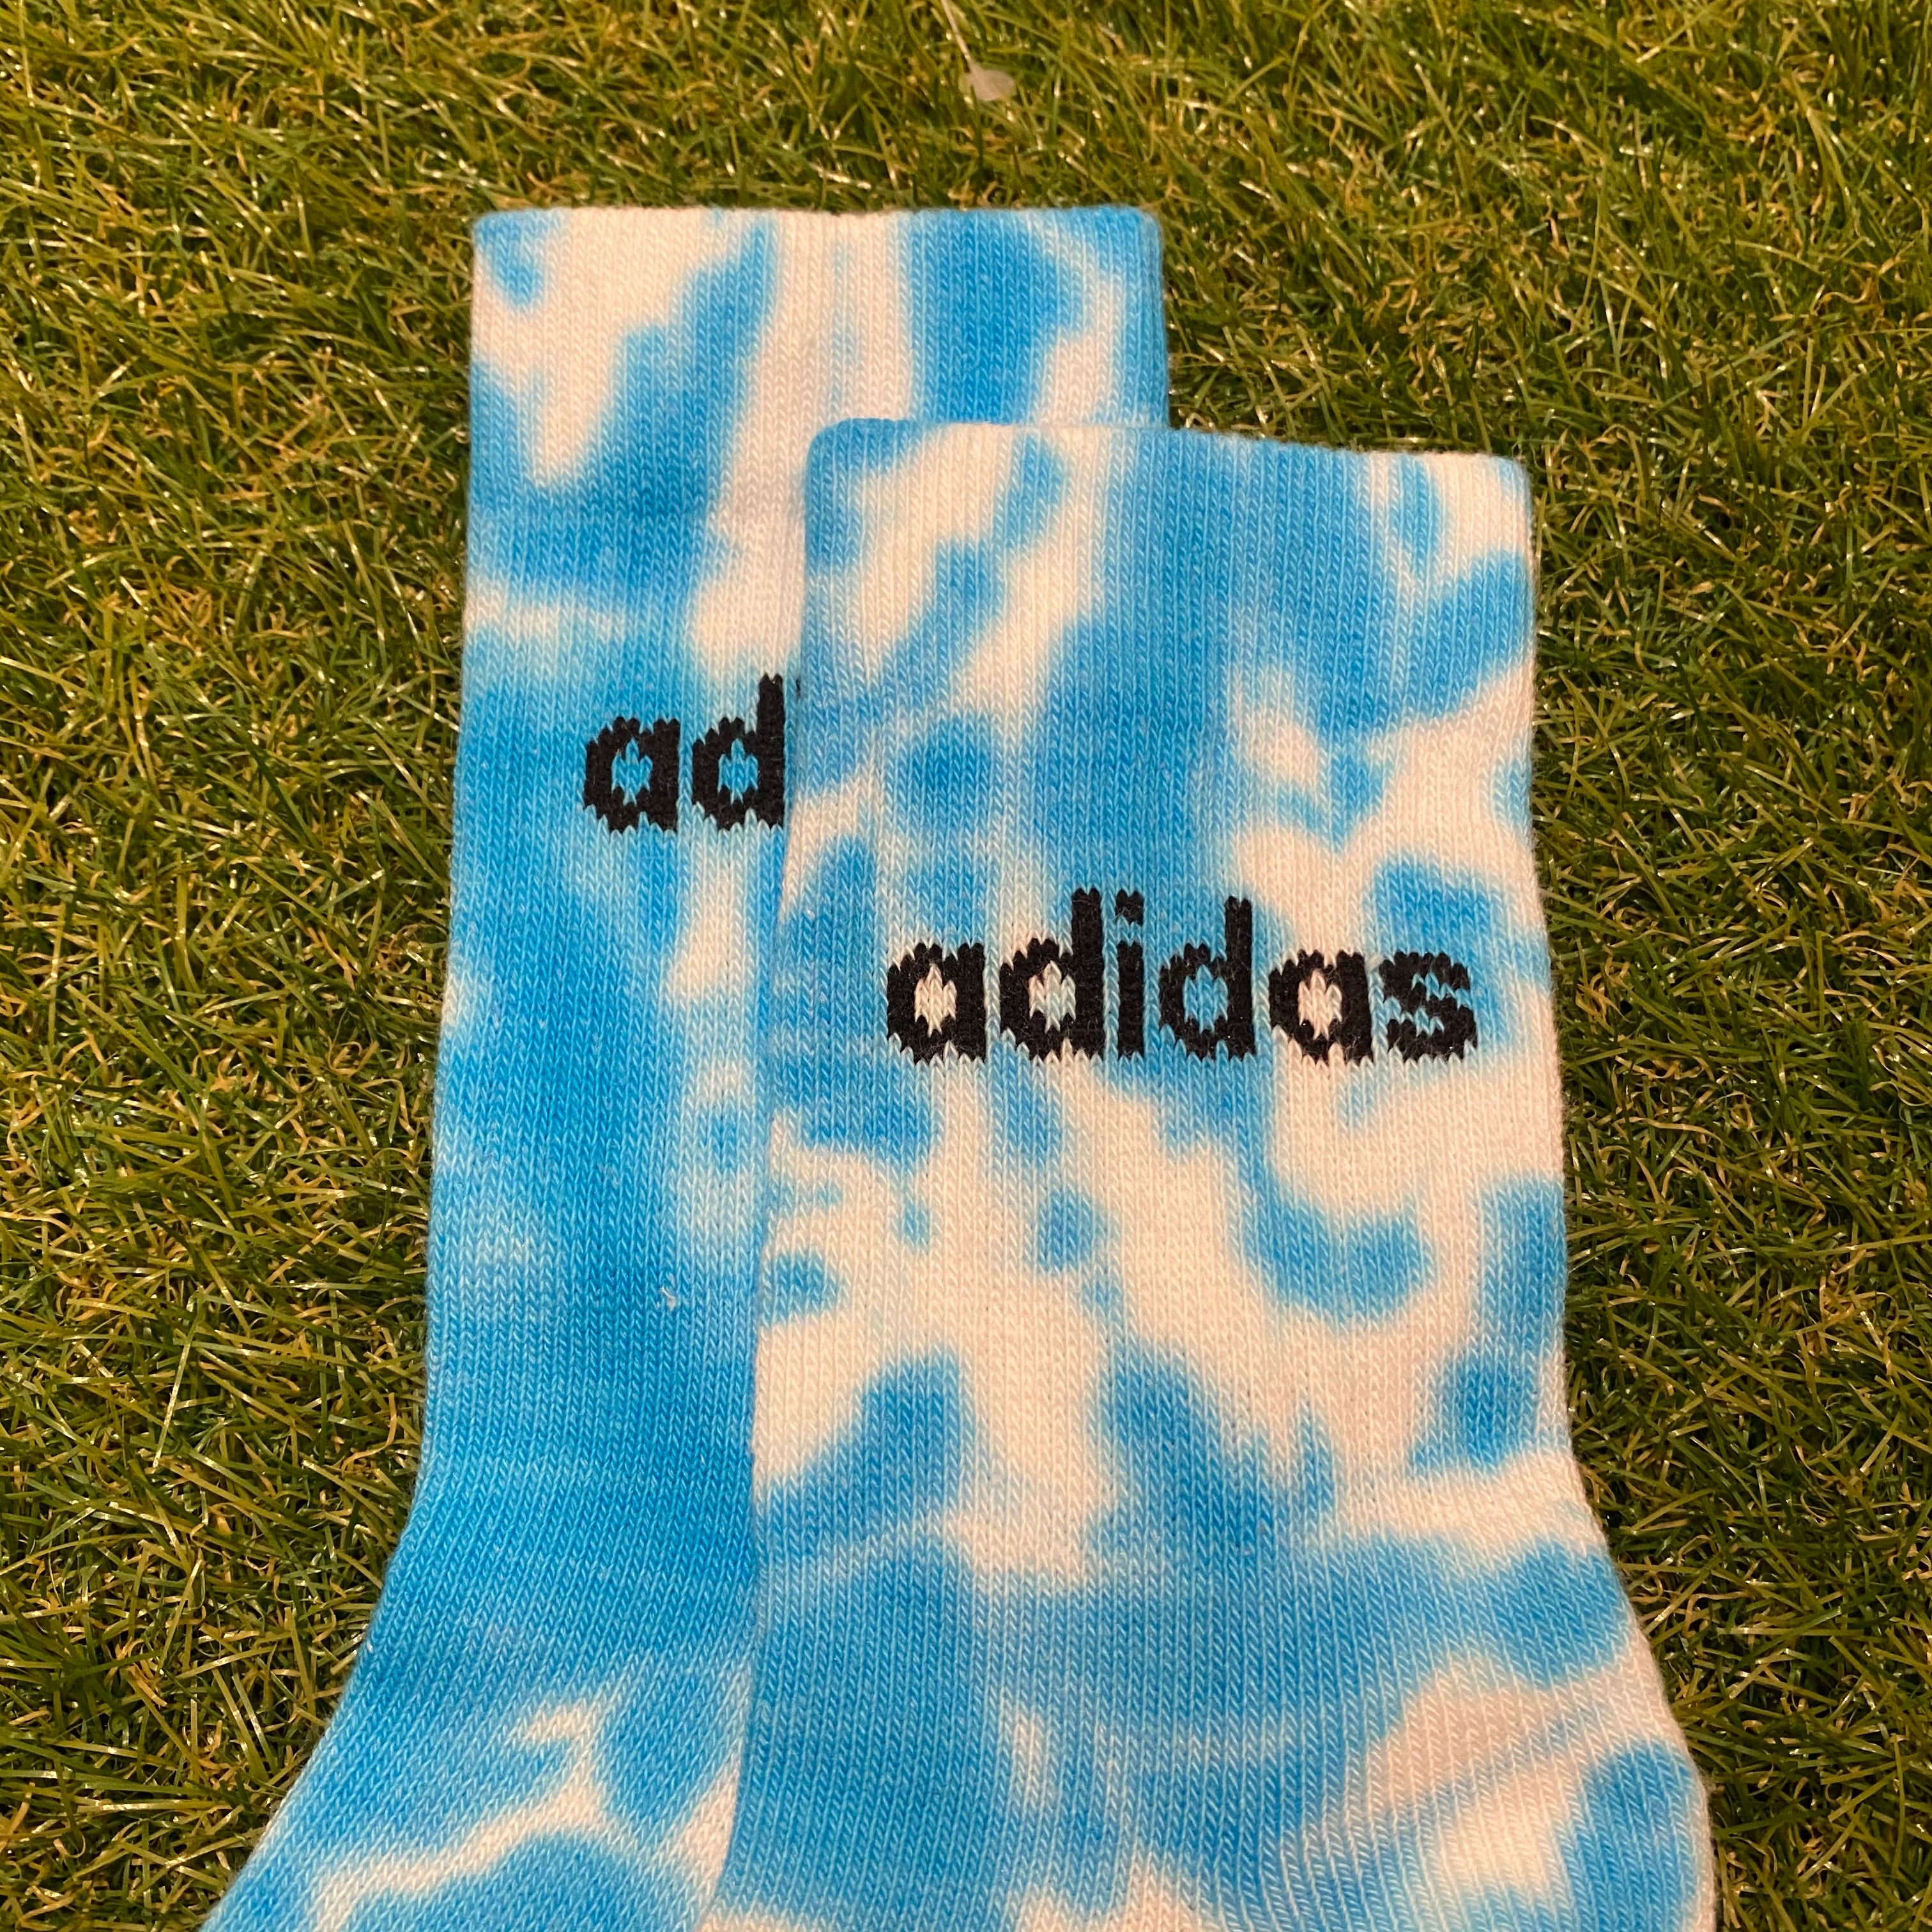 Adidas ‘Marbled Blue’ Socks